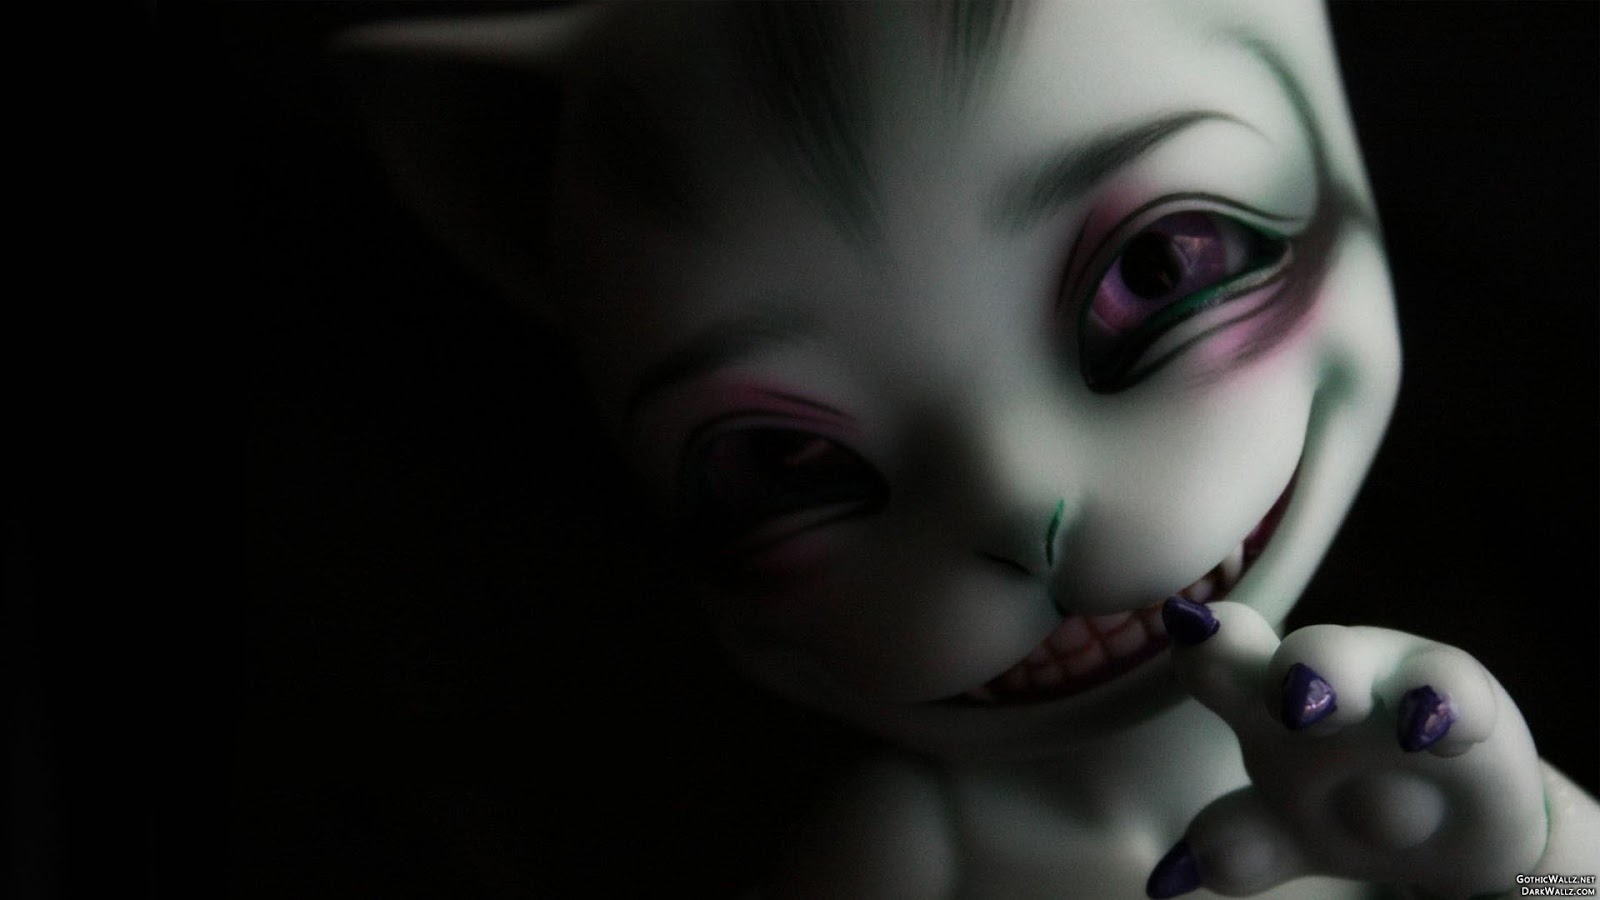 Scary Weird Creepy Creature Wallpaper HD Desktop Image And